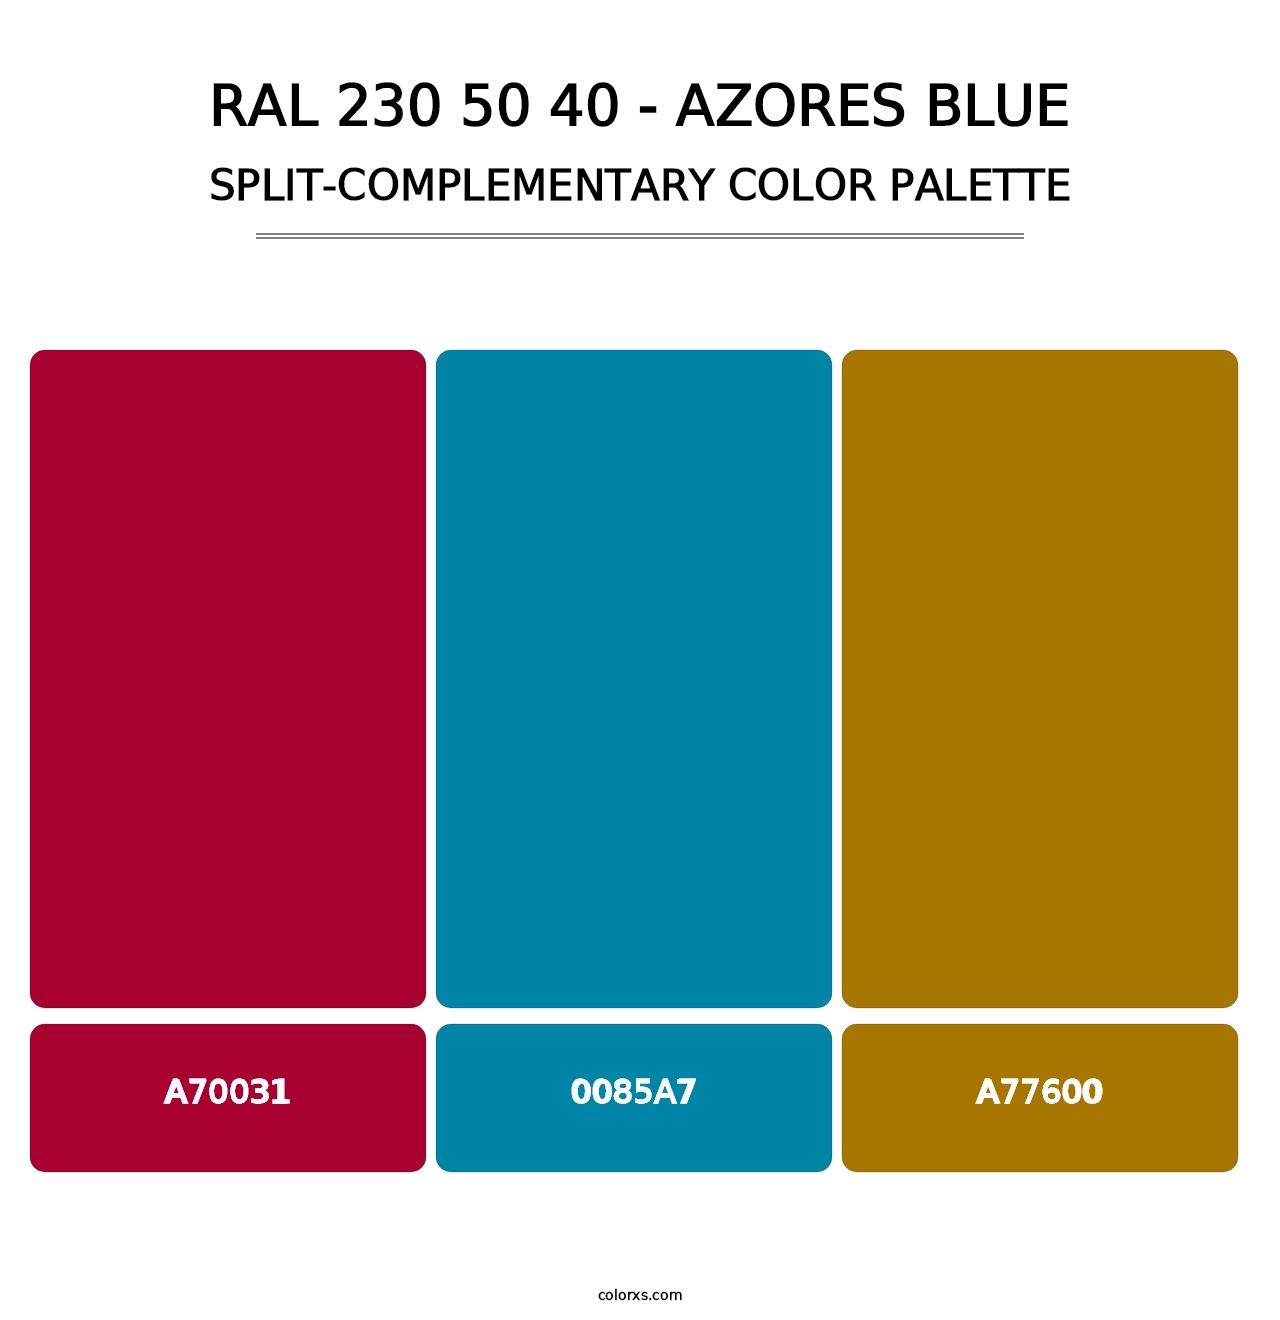 RAL 230 50 40 - Azores Blue - Split-Complementary Color Palette